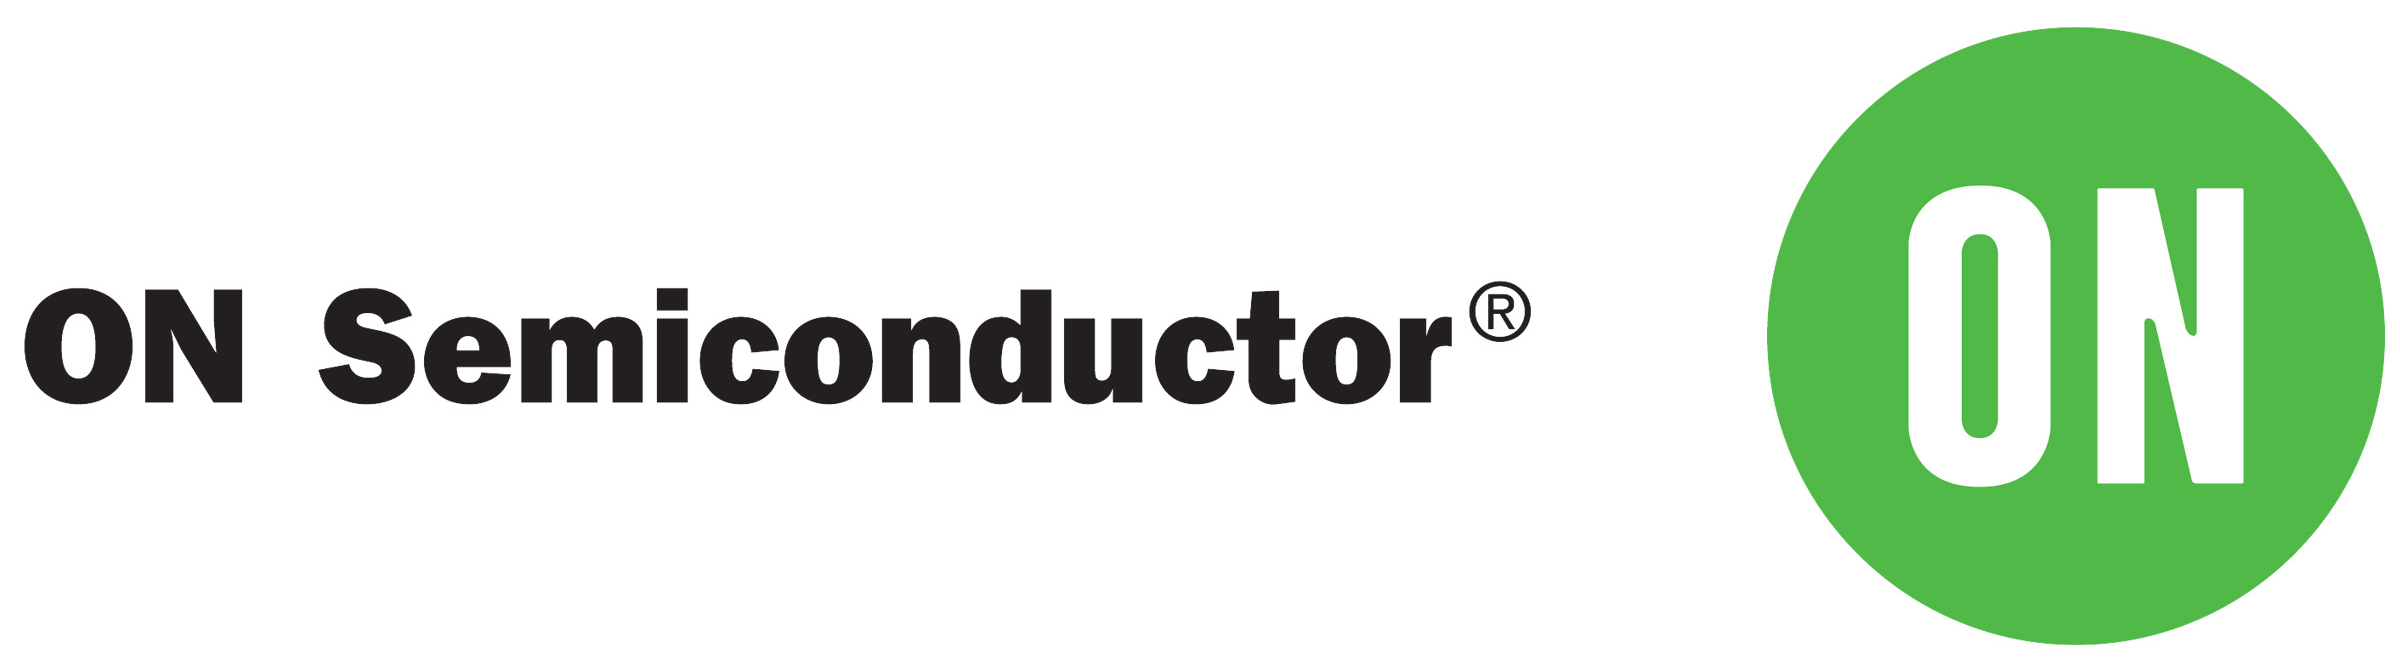 ON Semiconductor logo